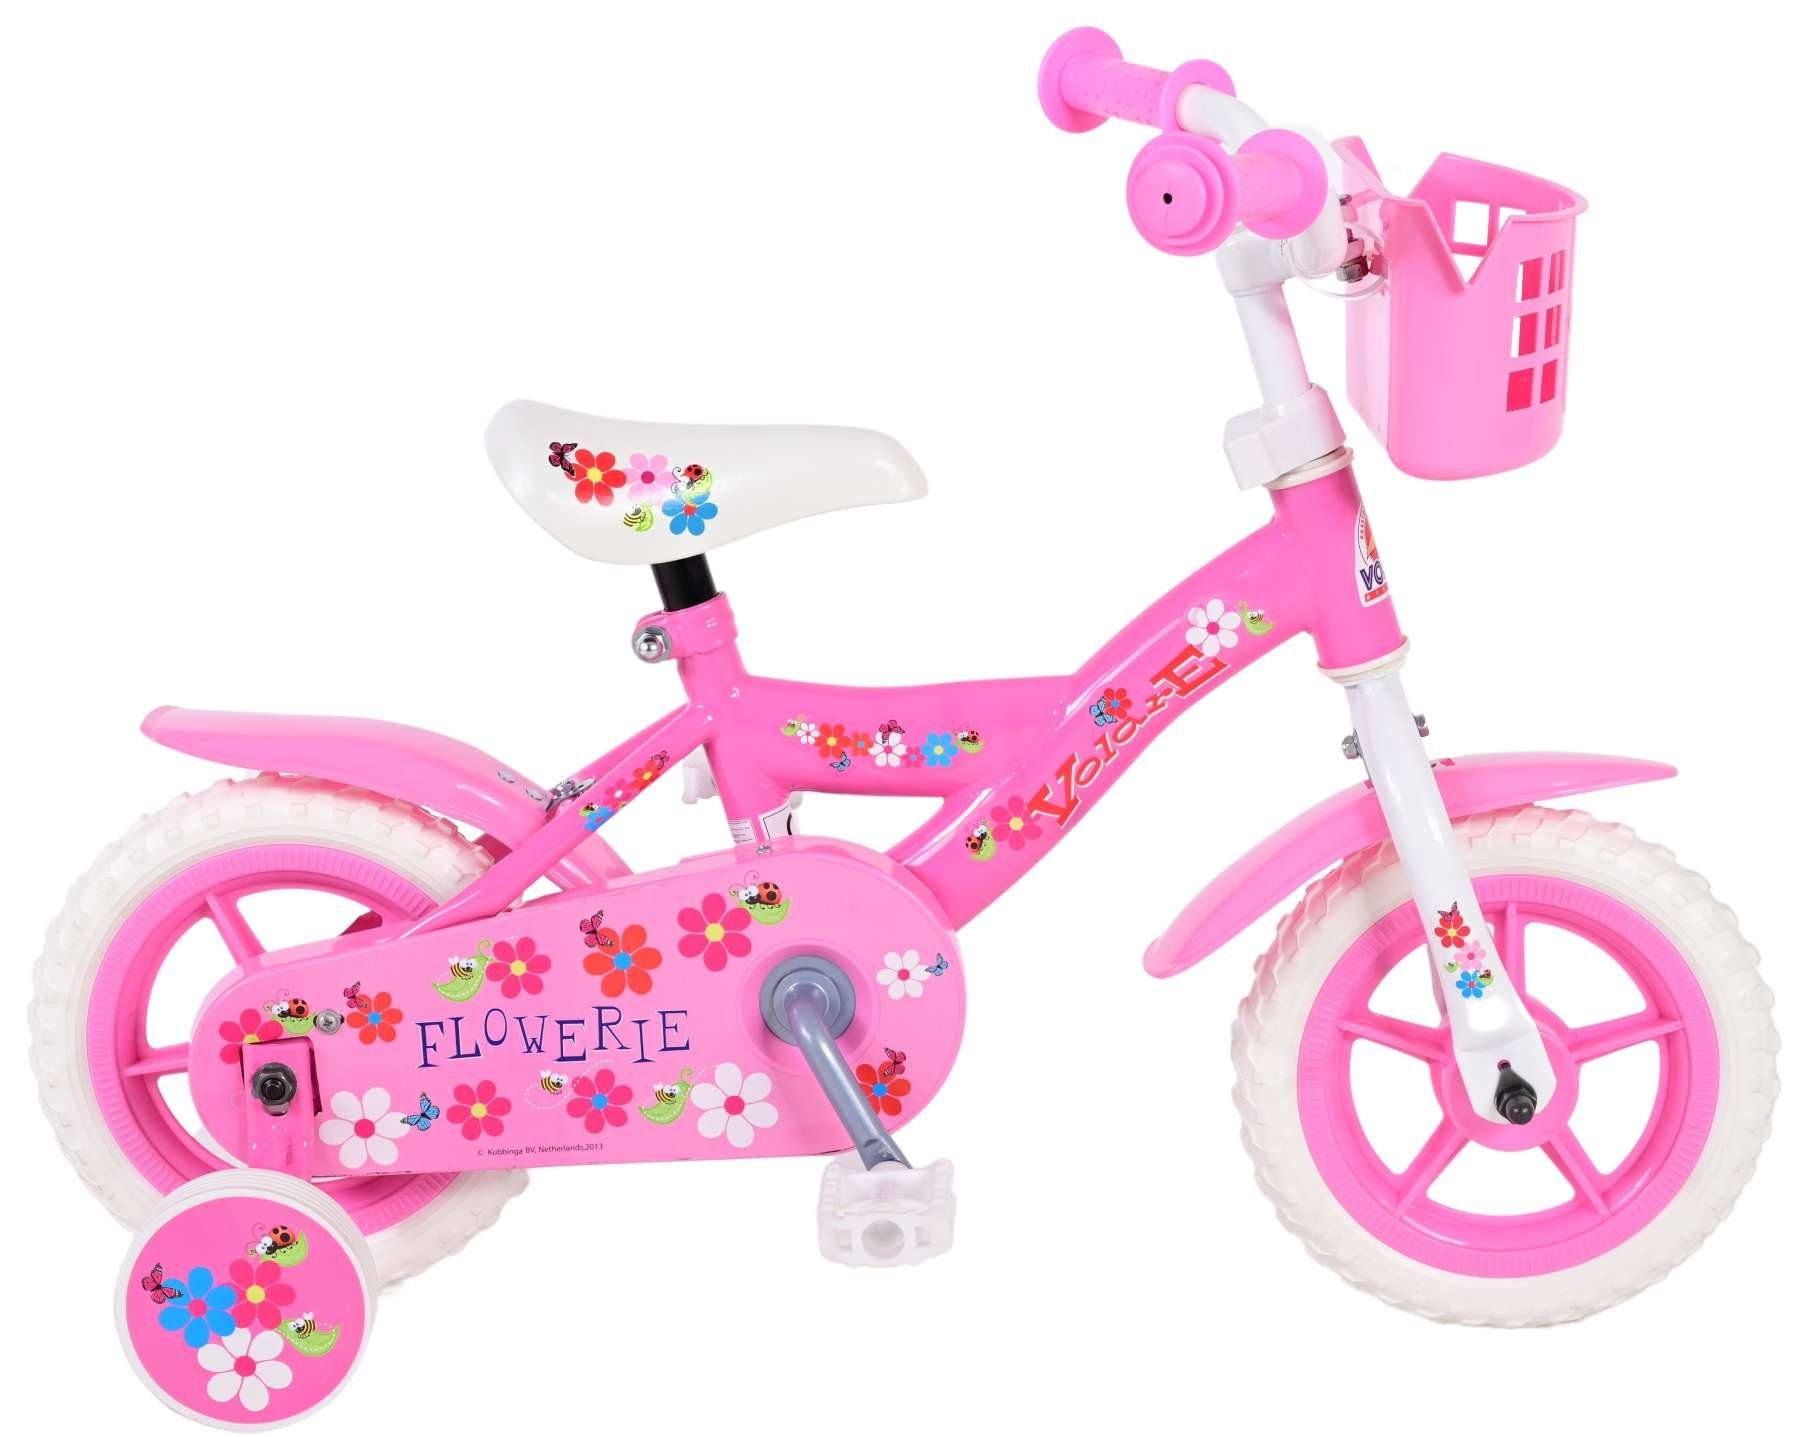 LeNoSa Kinderfahrrad 10 Zoll Flowerie Fahrrad für Mädchen